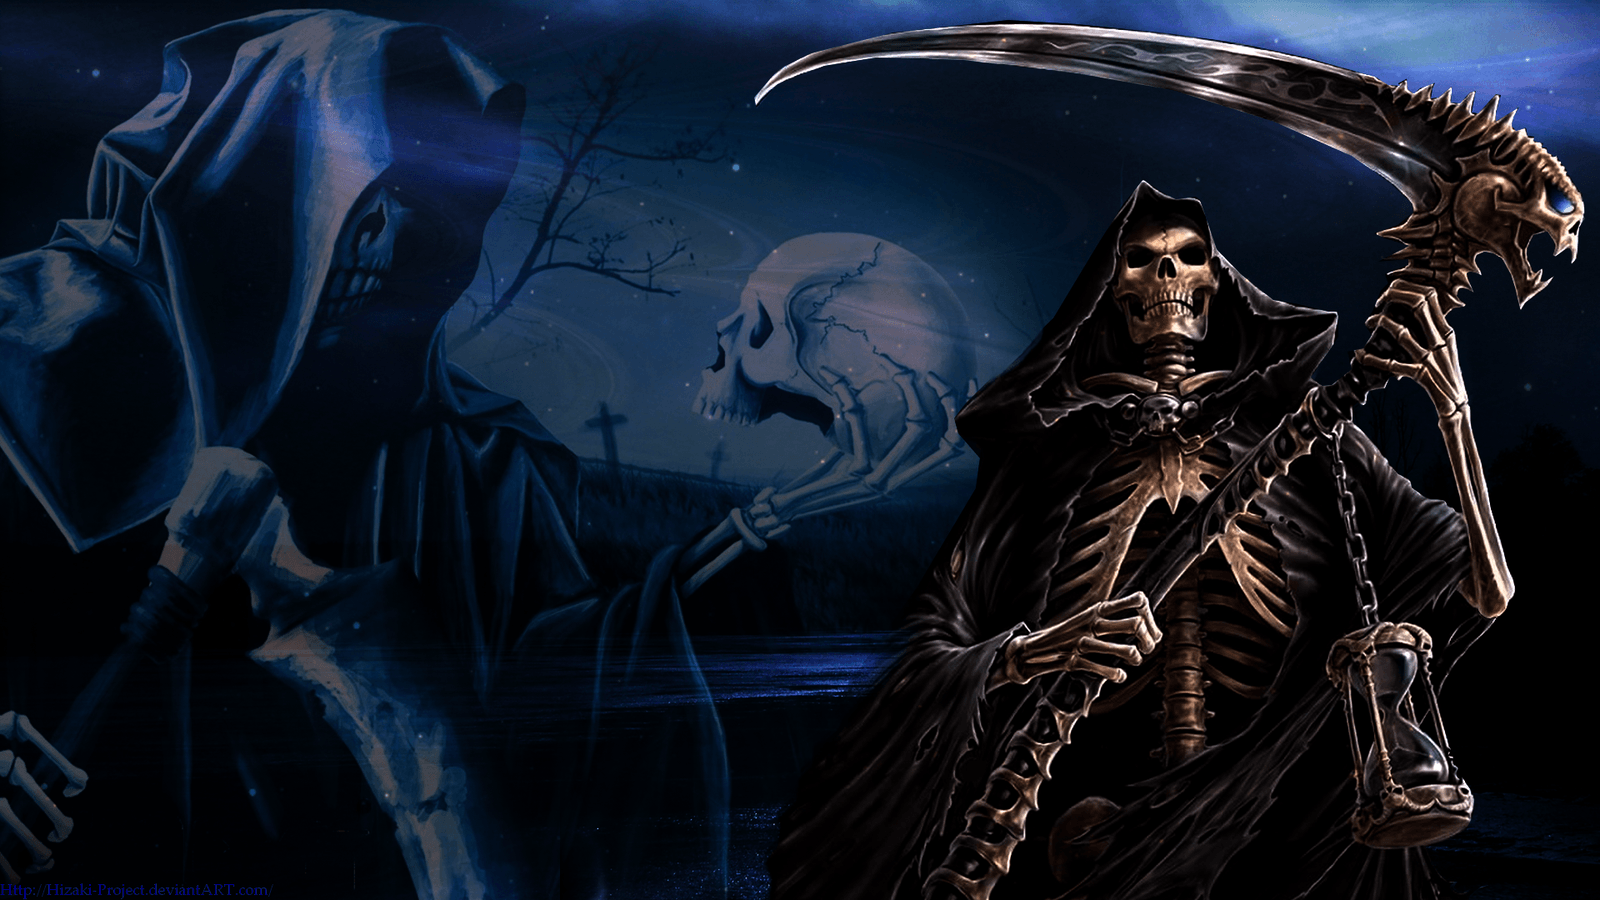 Free Grim Reaper On Horse Wallpaper Photo. Santa muerte, Angel de la muerte, Muerte